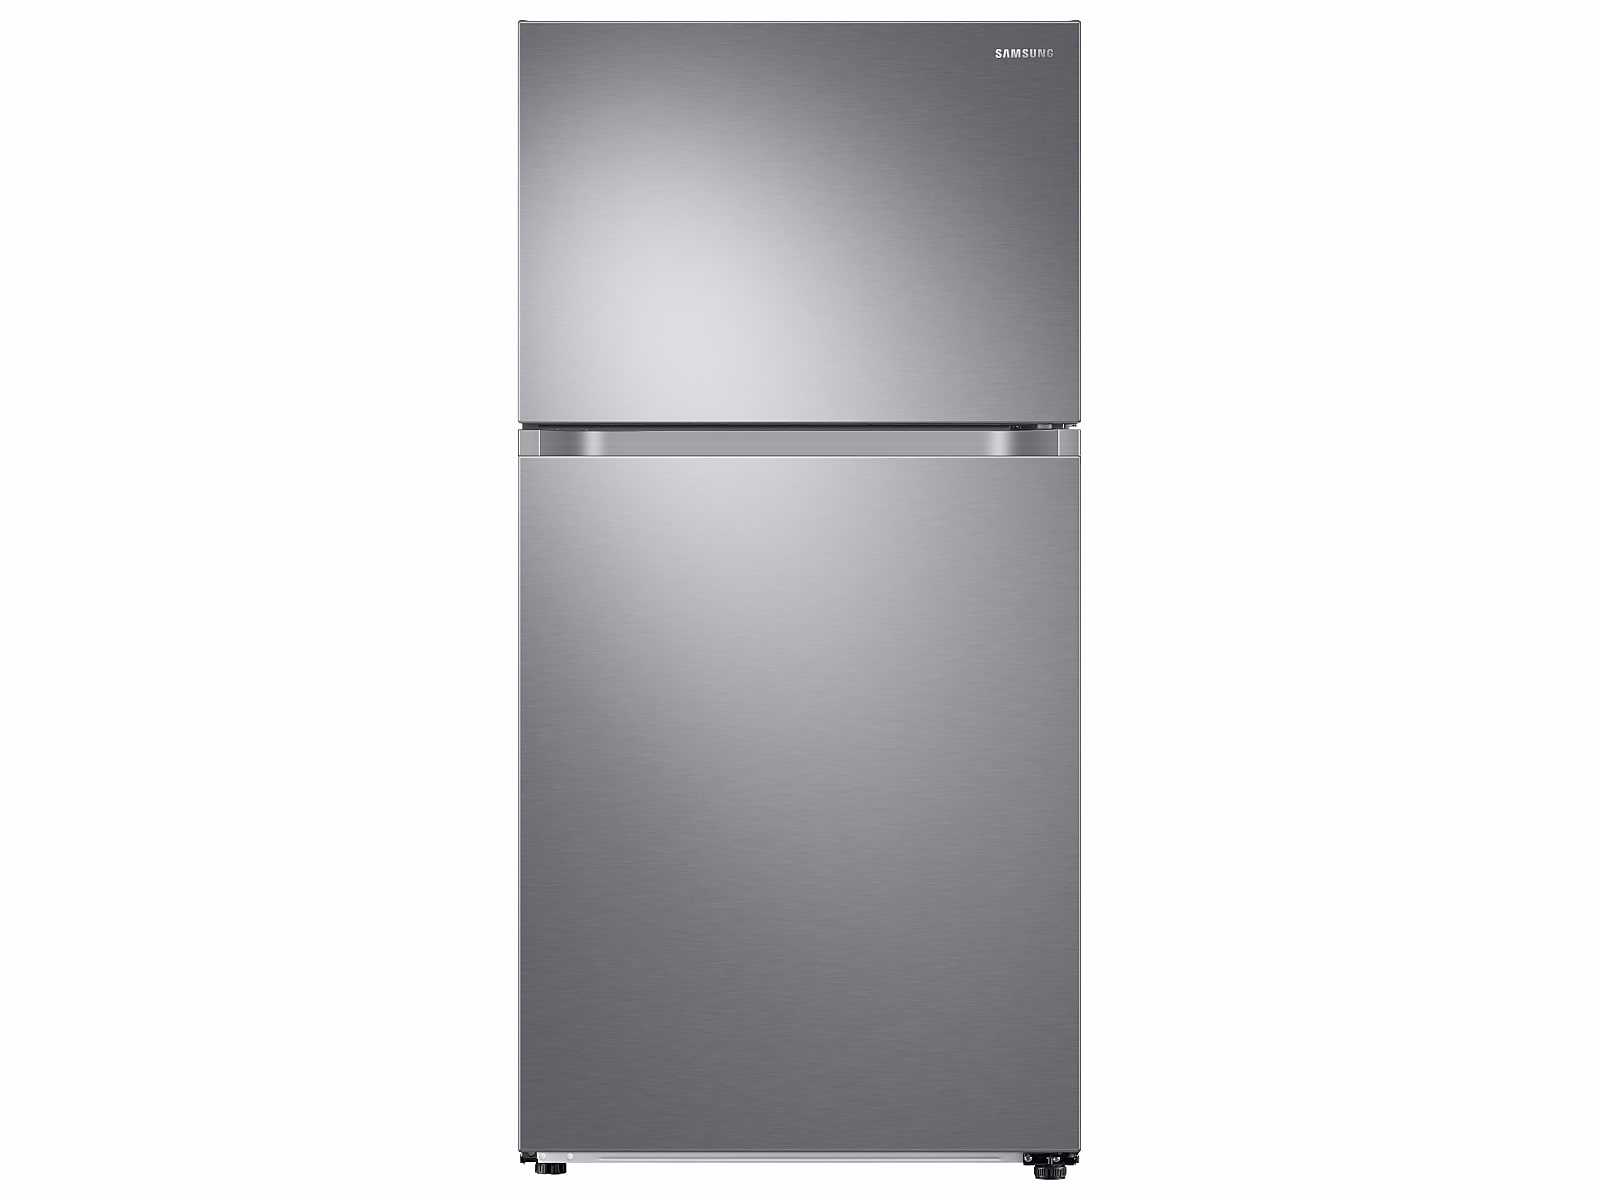 Samsung 21 cu. ft. Top Freezer Refrigerator with FlexZone™ in Silver(RT21M6213SR/AA)